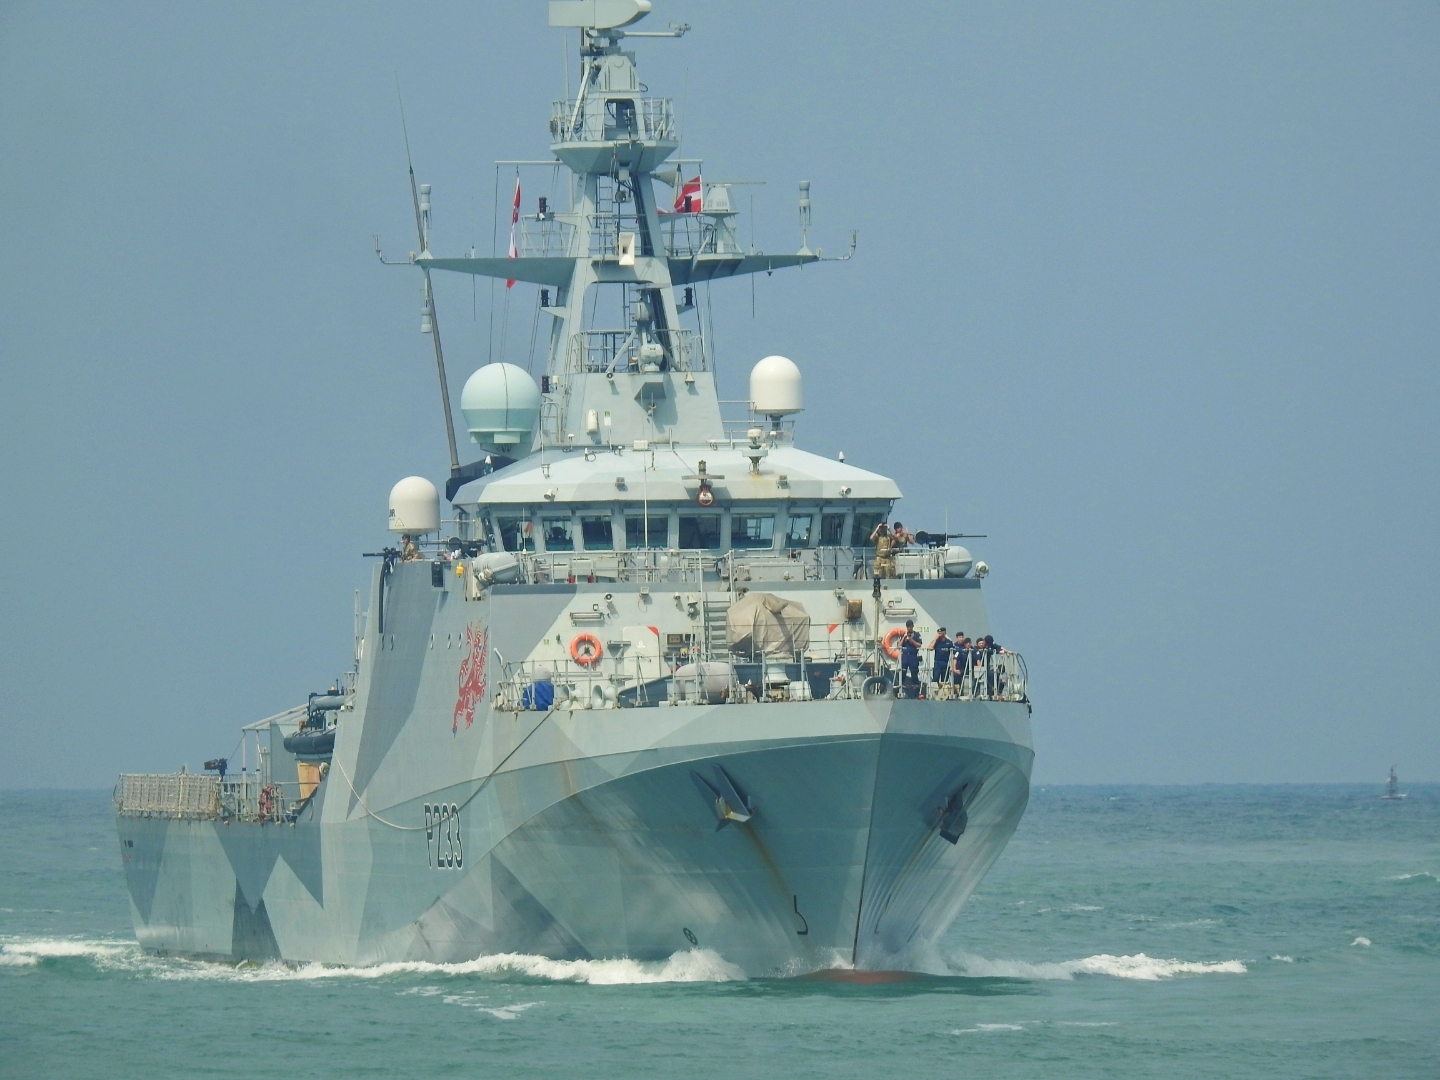 British Navy Warship “HMS Tamar” On A Visit To Chennai